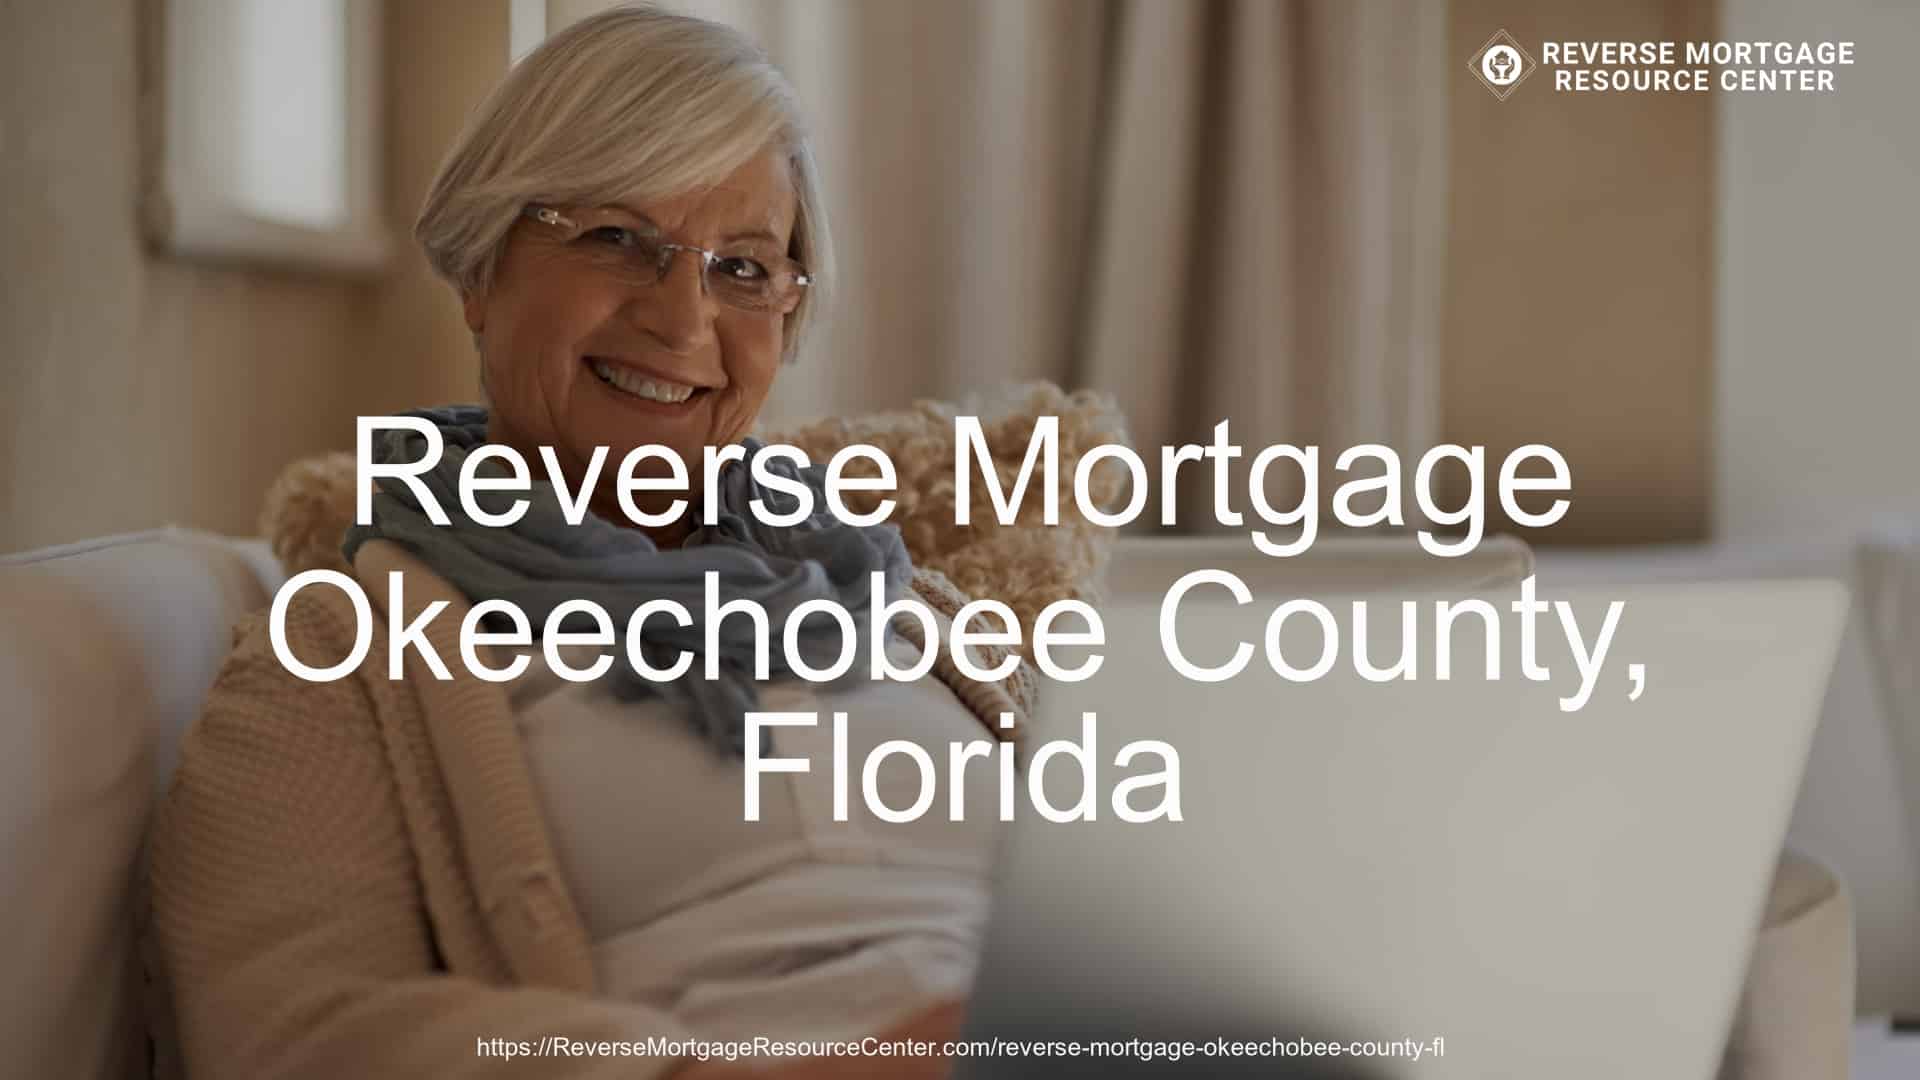 Reverse Mortgage Loans in Okeechobee County Florida